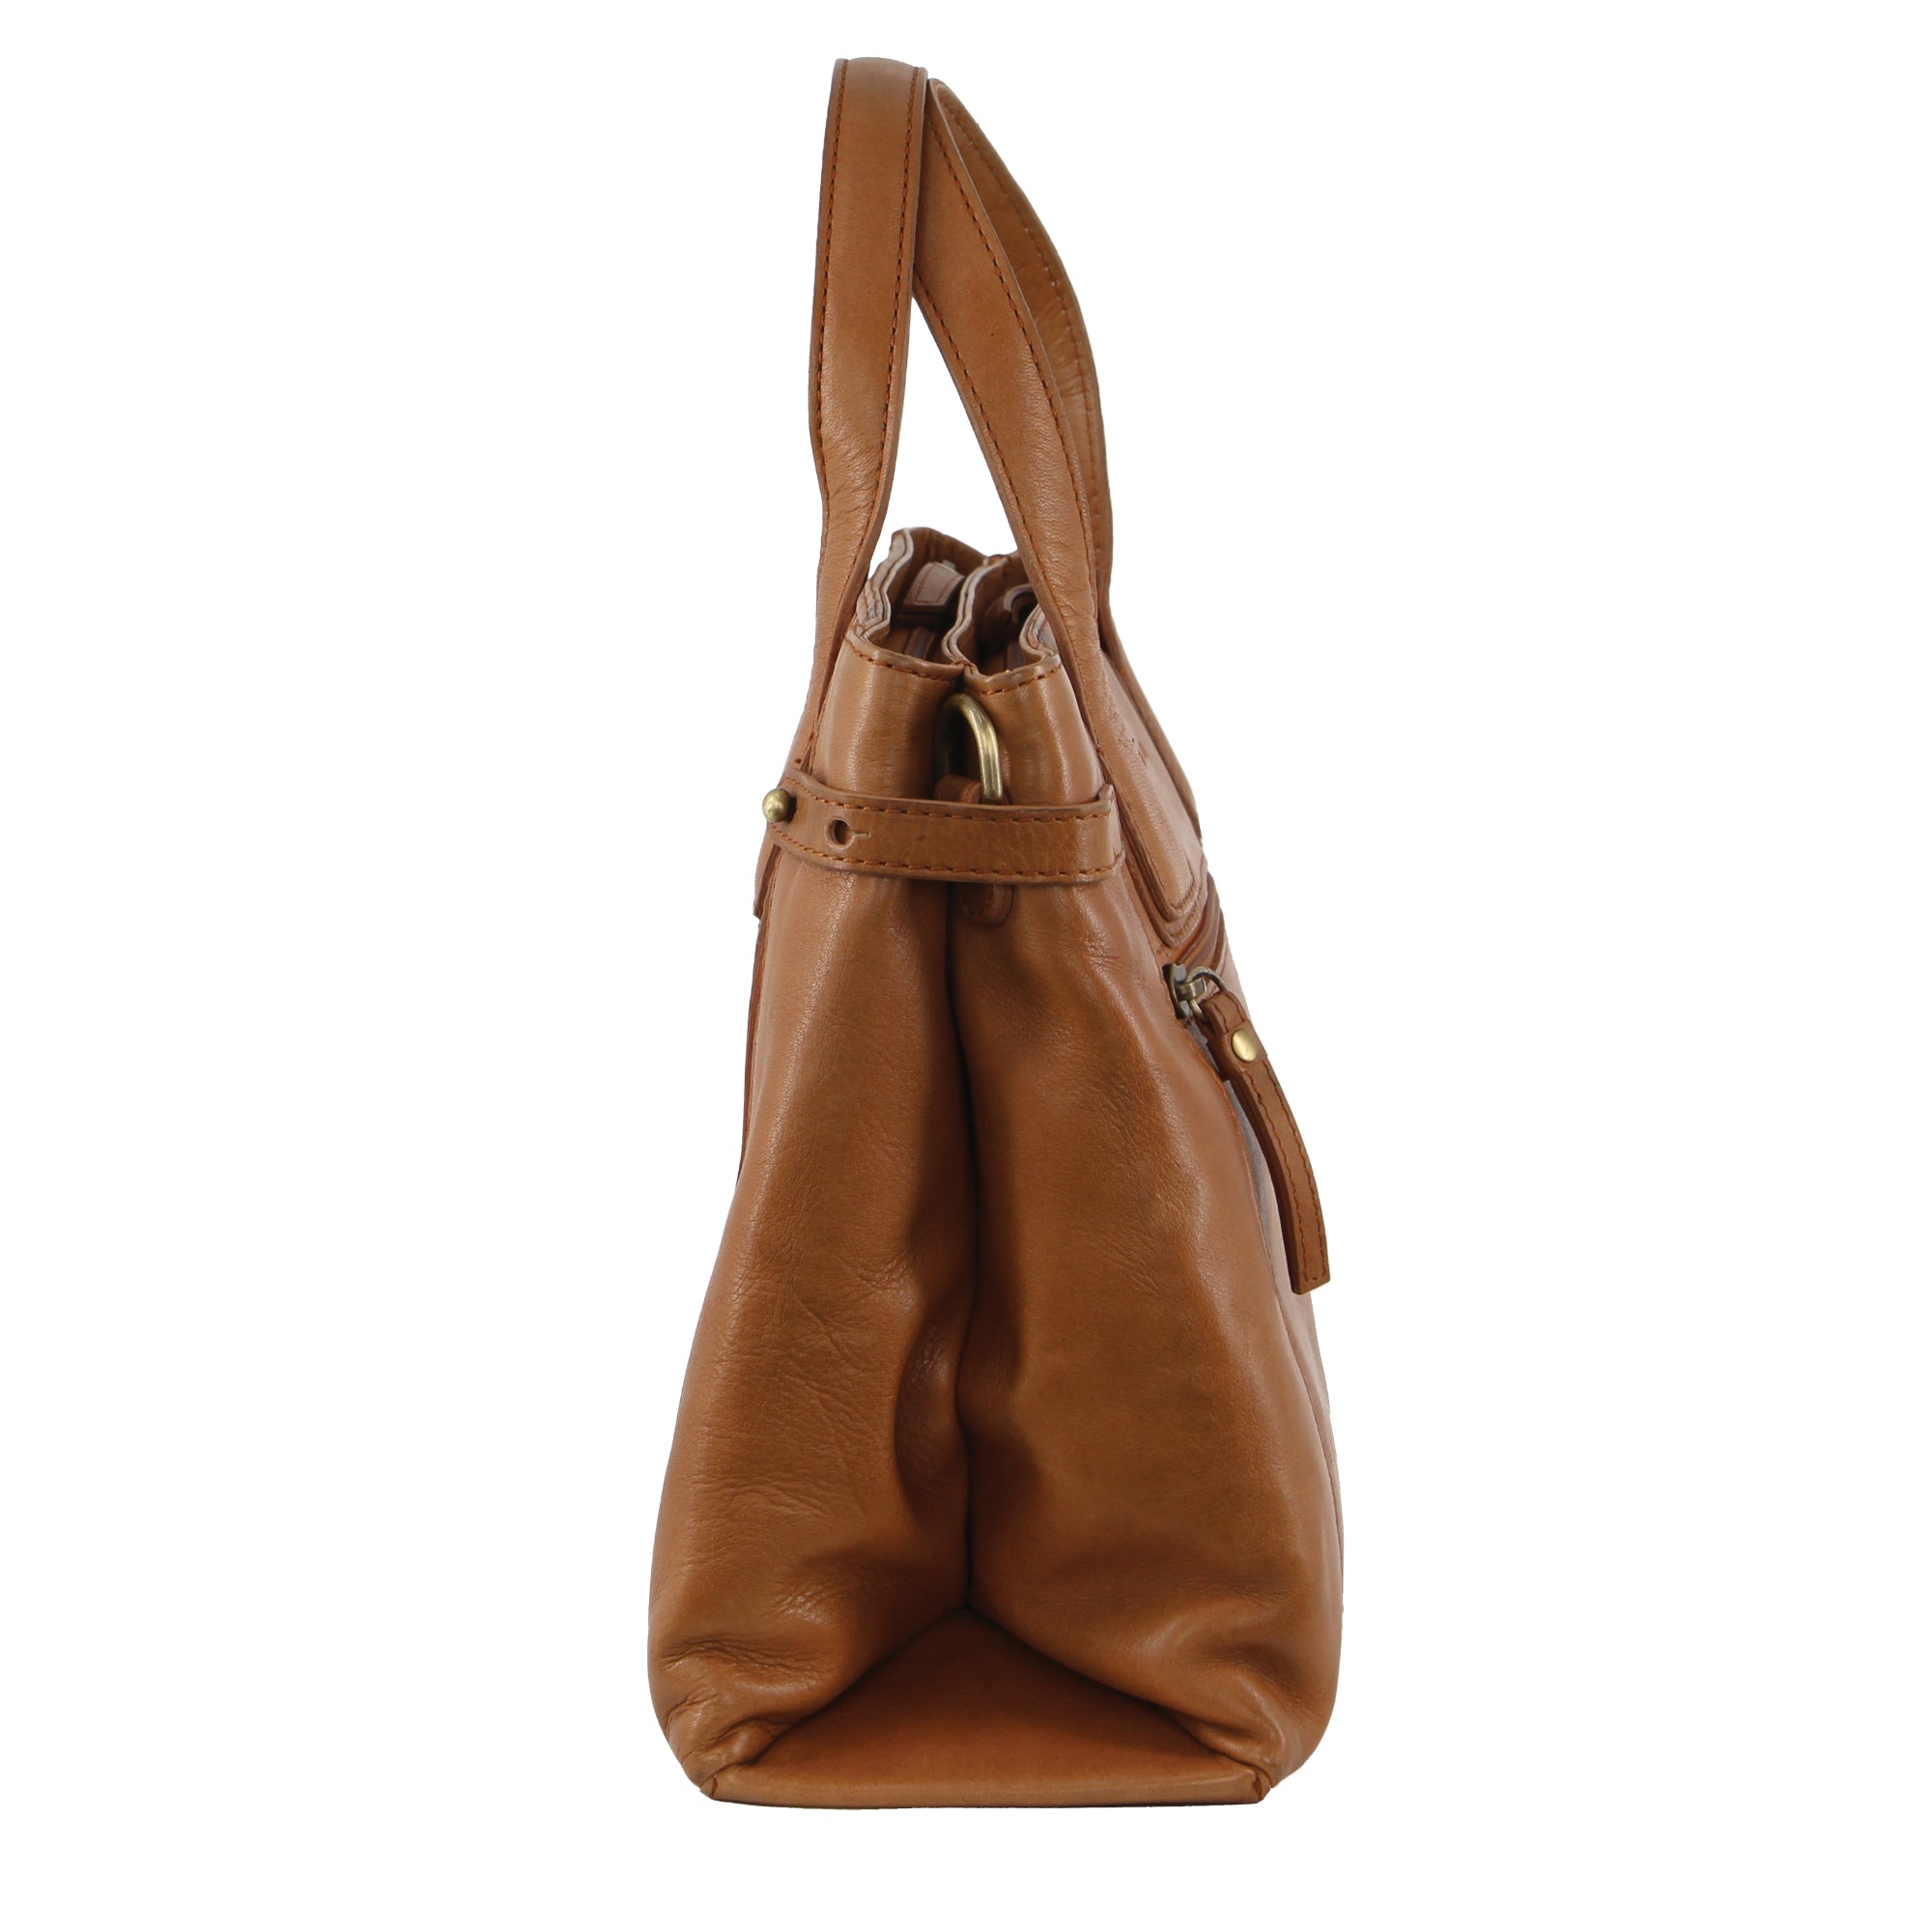 Pierre Cardin Ladies Leather Stitch-design Tote Bag in Camel